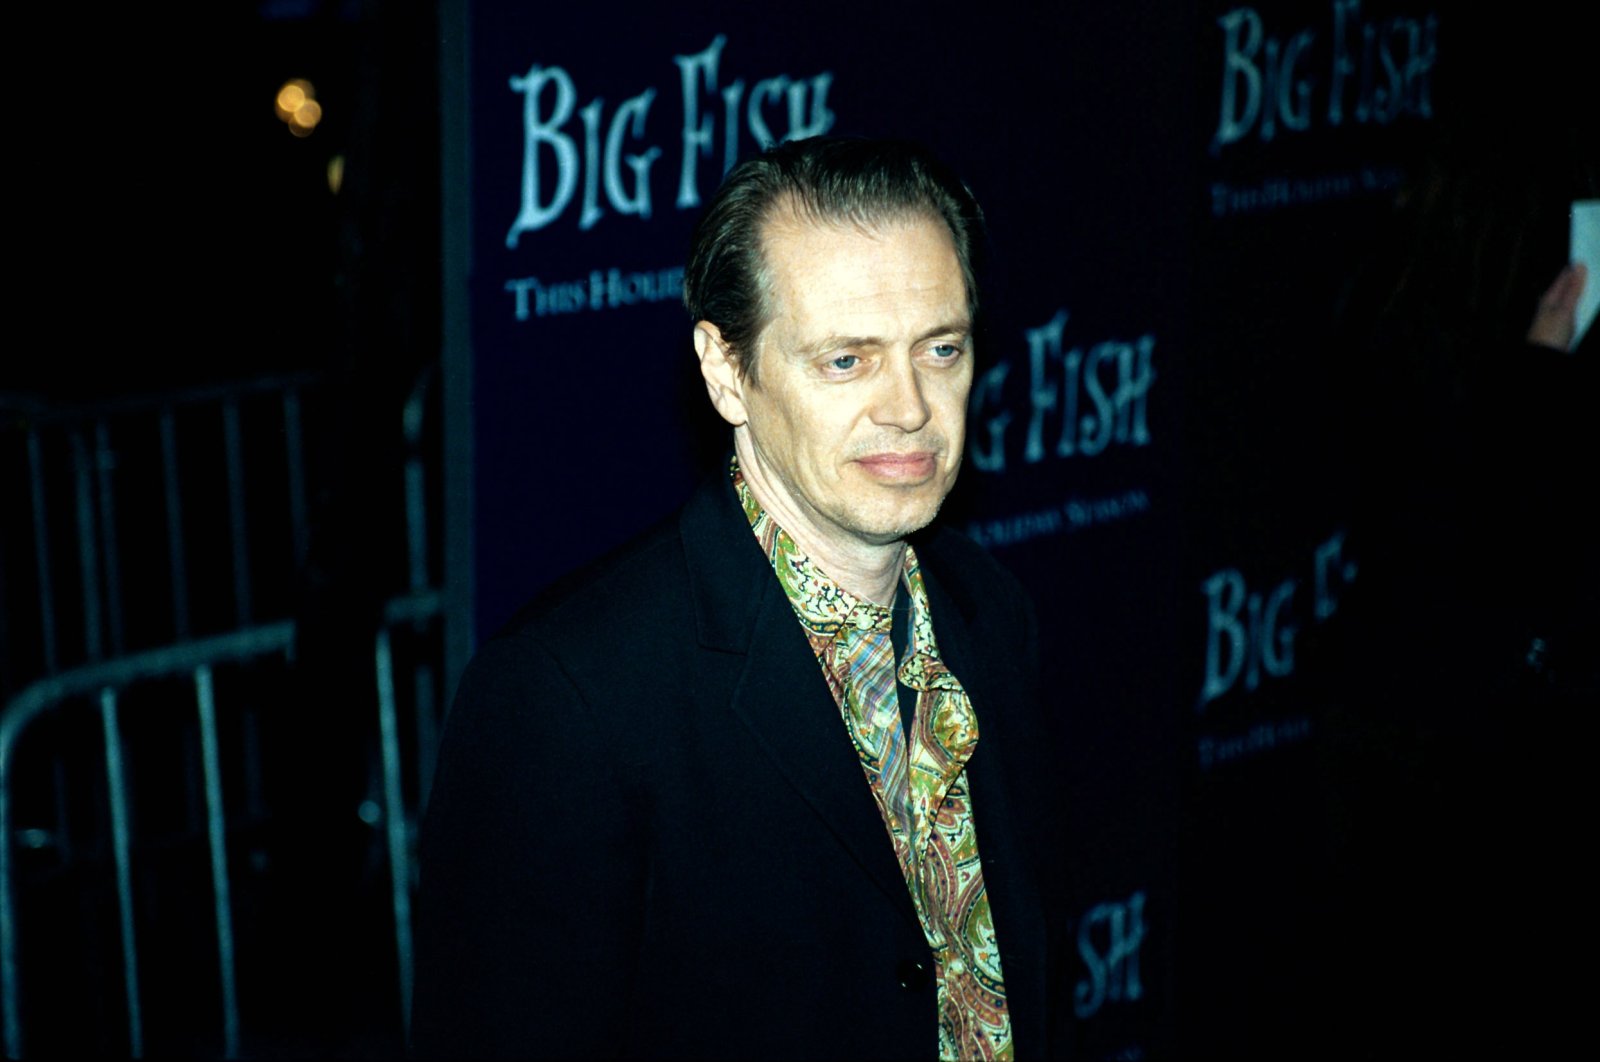 Steve Buscemi at the premiere of &quot;Big Fish&quot; by Tim Burton, April 12, 2003. (Shutterstock Photo)